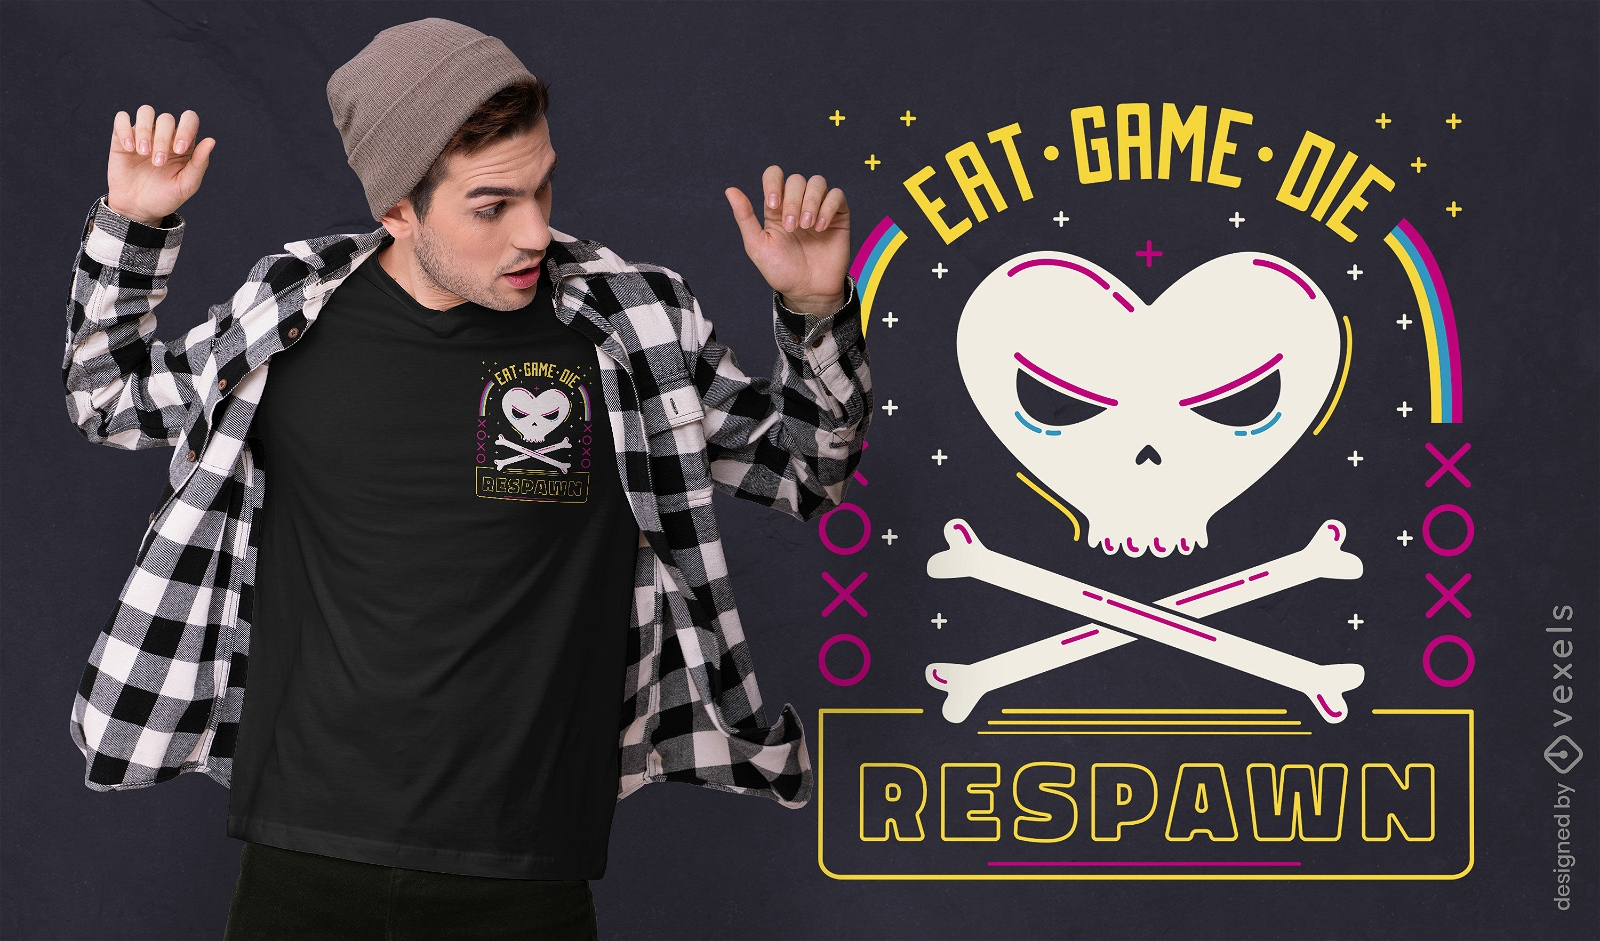 Respawn gaming 80s t-shirt design